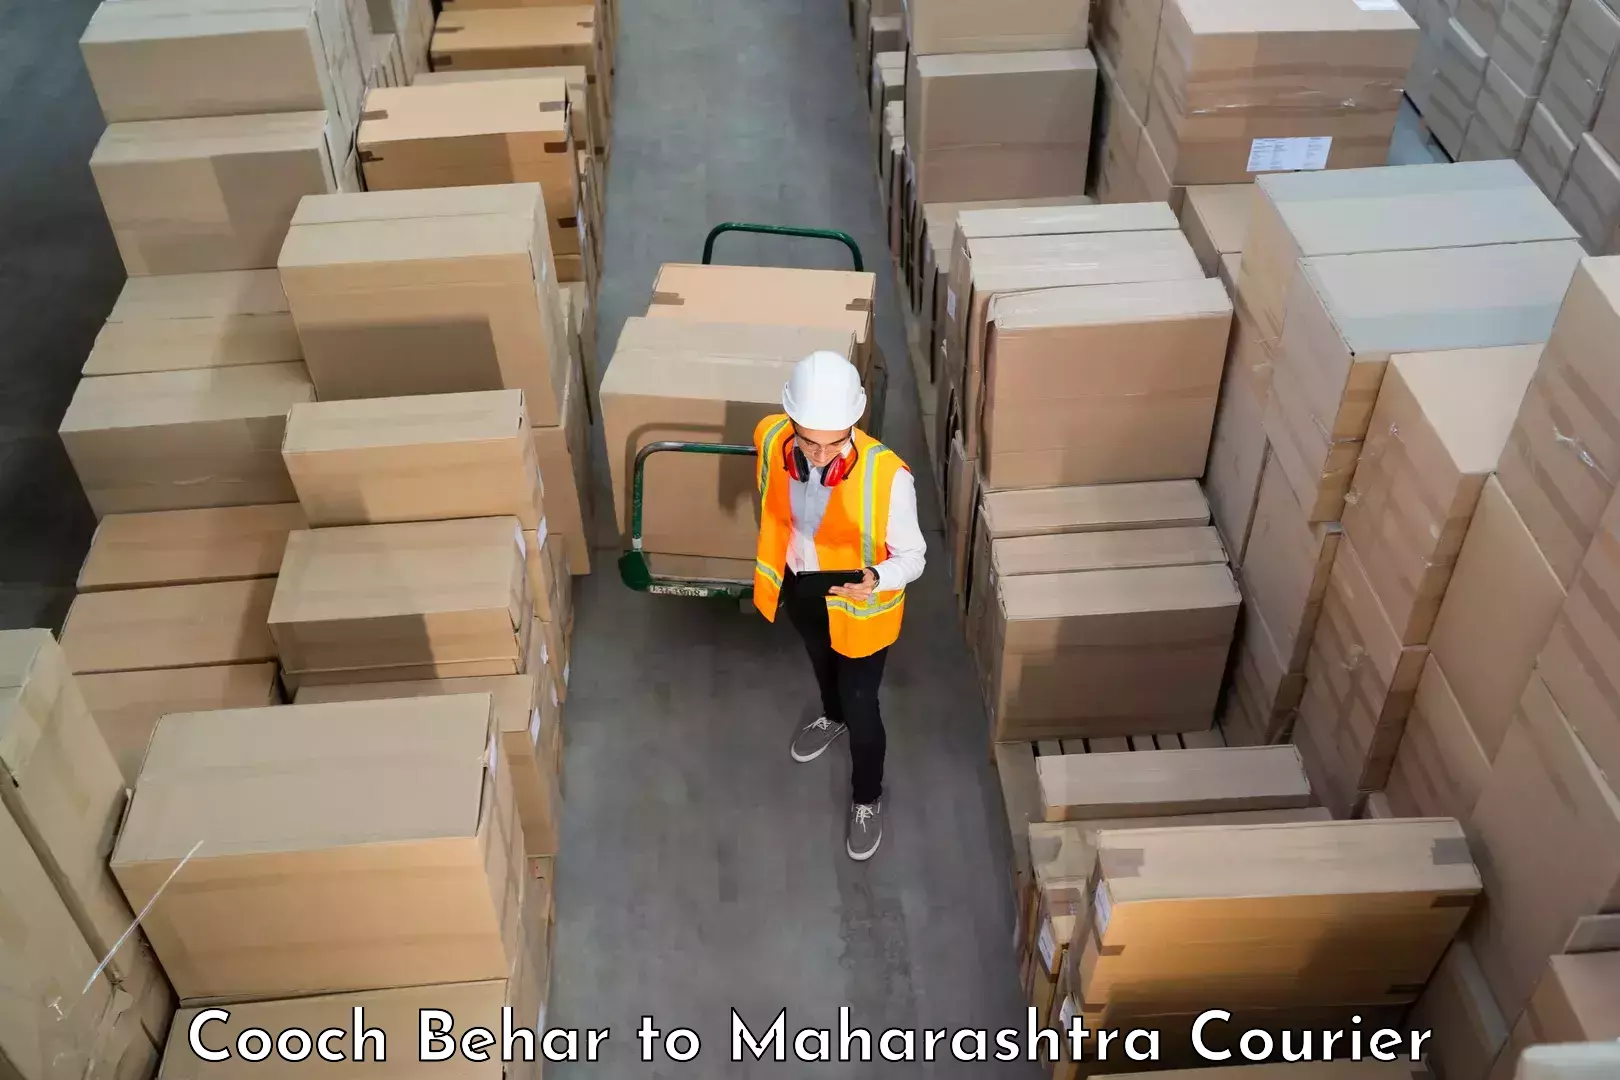 Furniture transport company Cooch Behar to Ulhasnagar